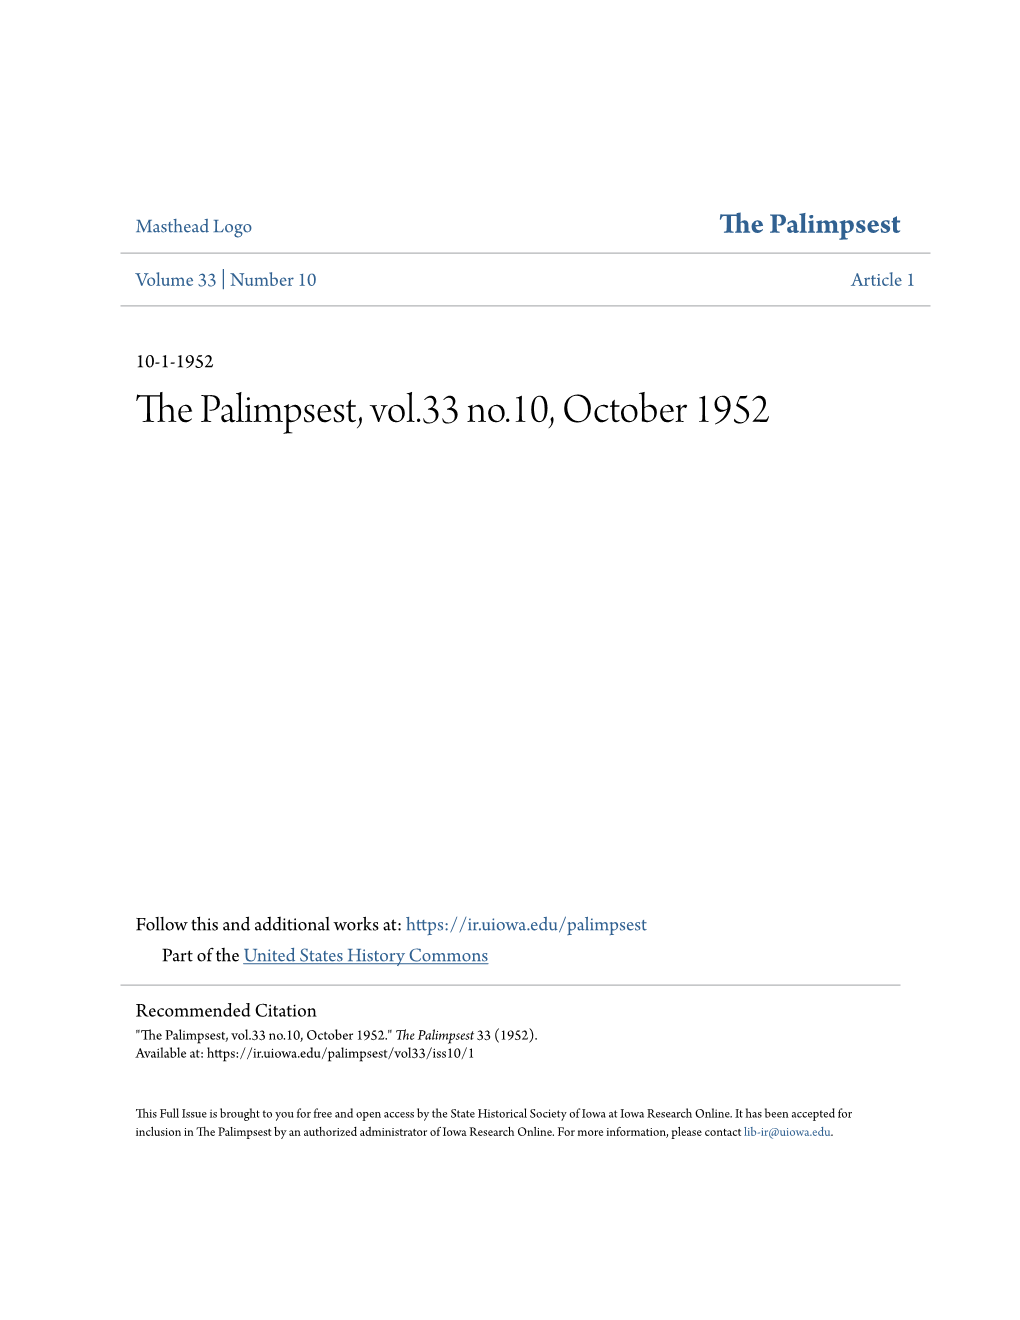 The Palimpsest, Vol.33 No.10, October 1952